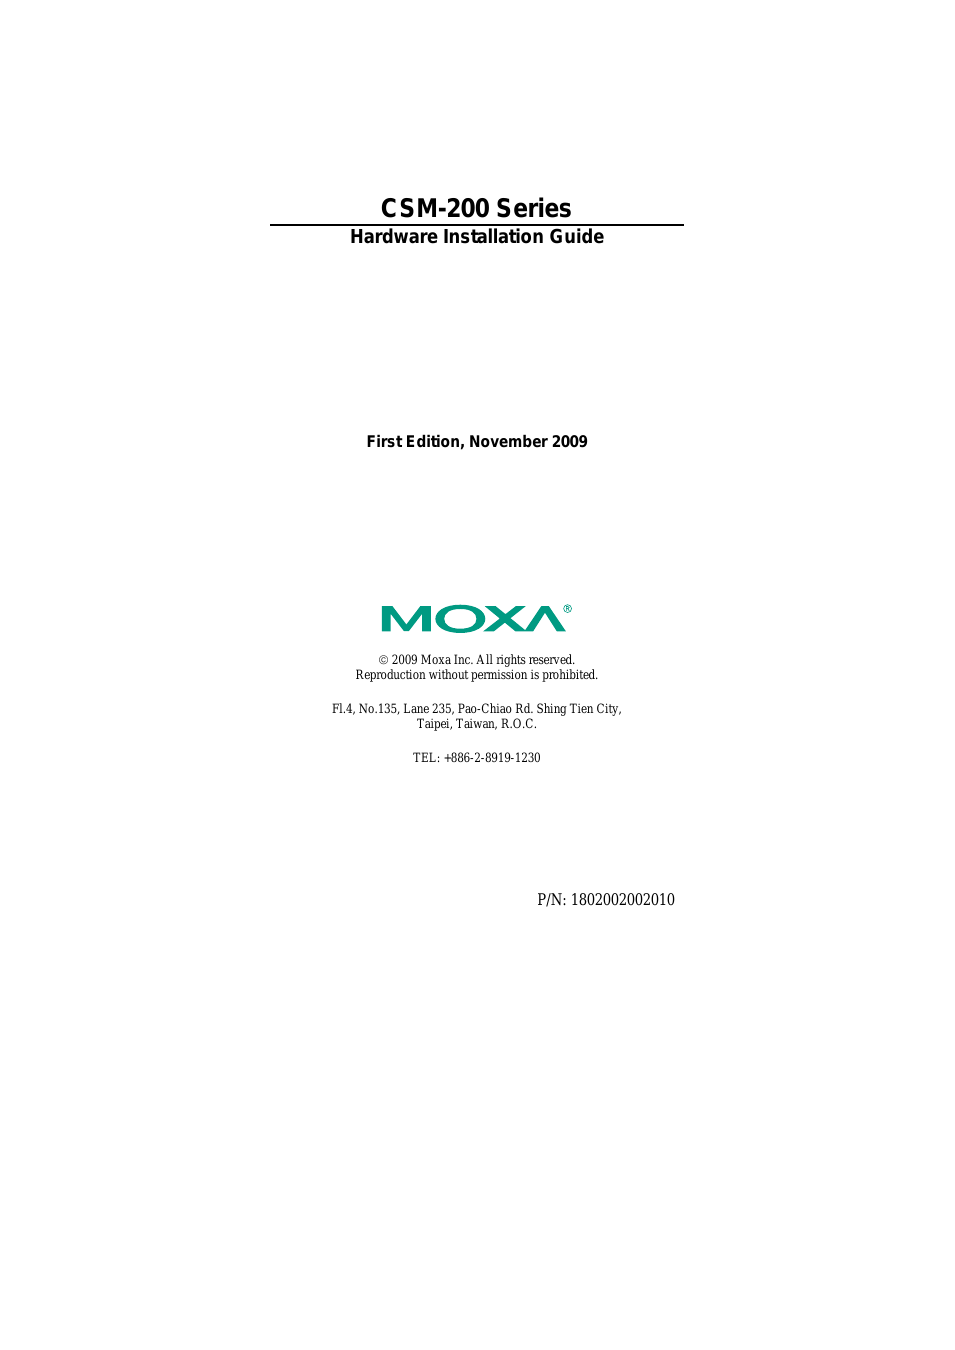 Moxa CSM 200